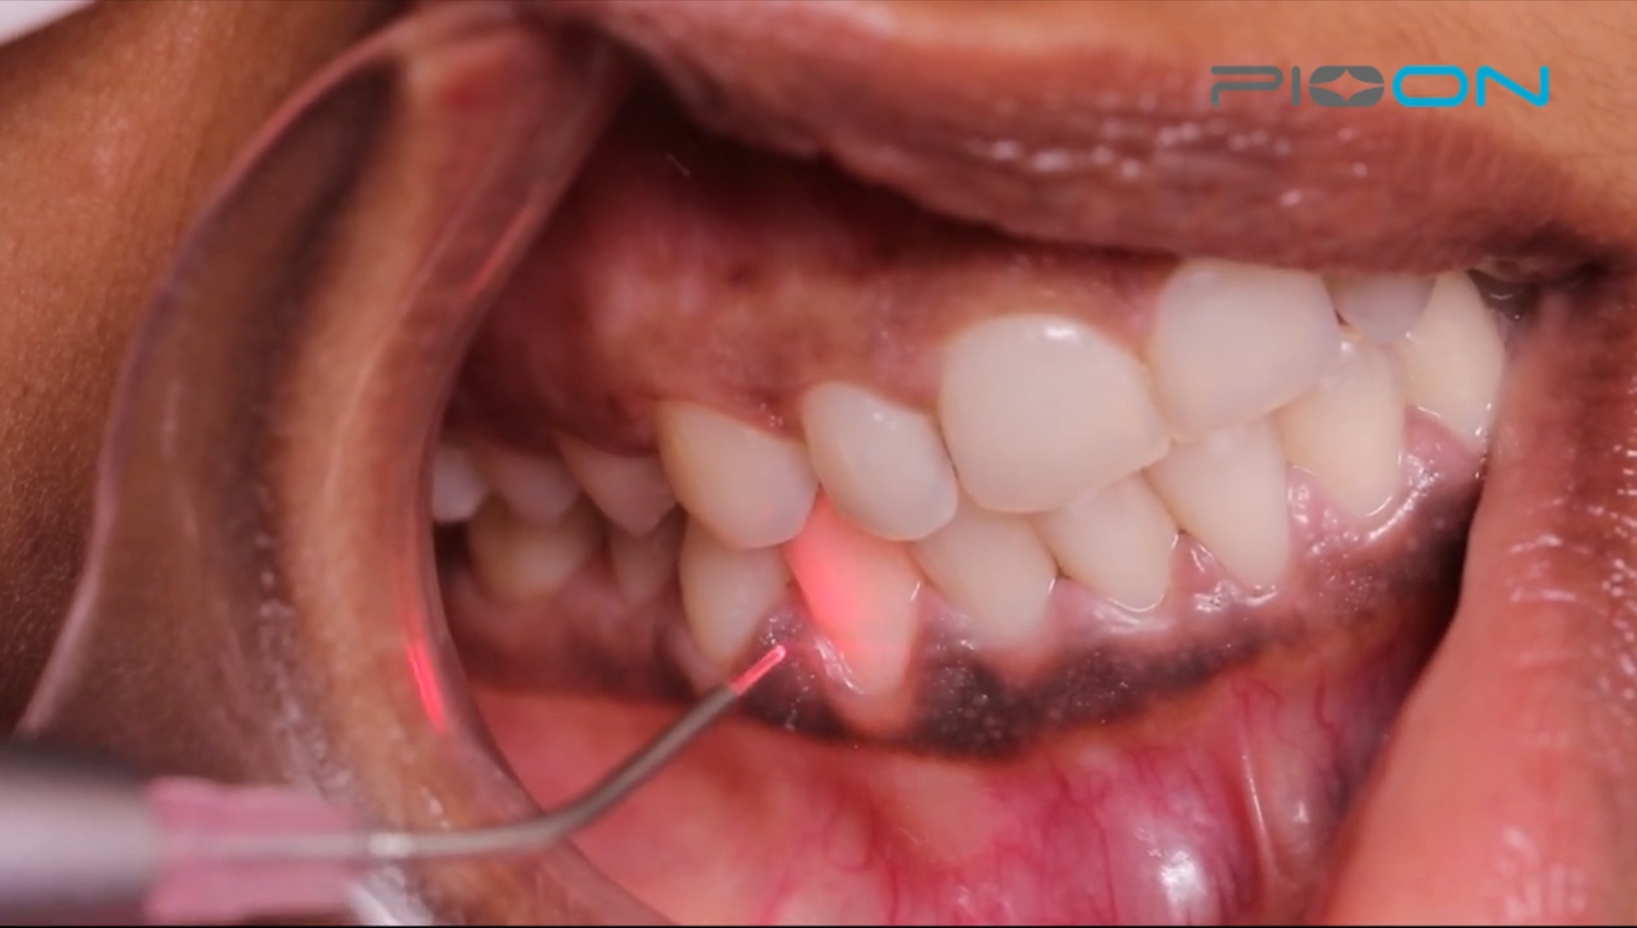 The most effective dentin desensitization method - Pioon Laser